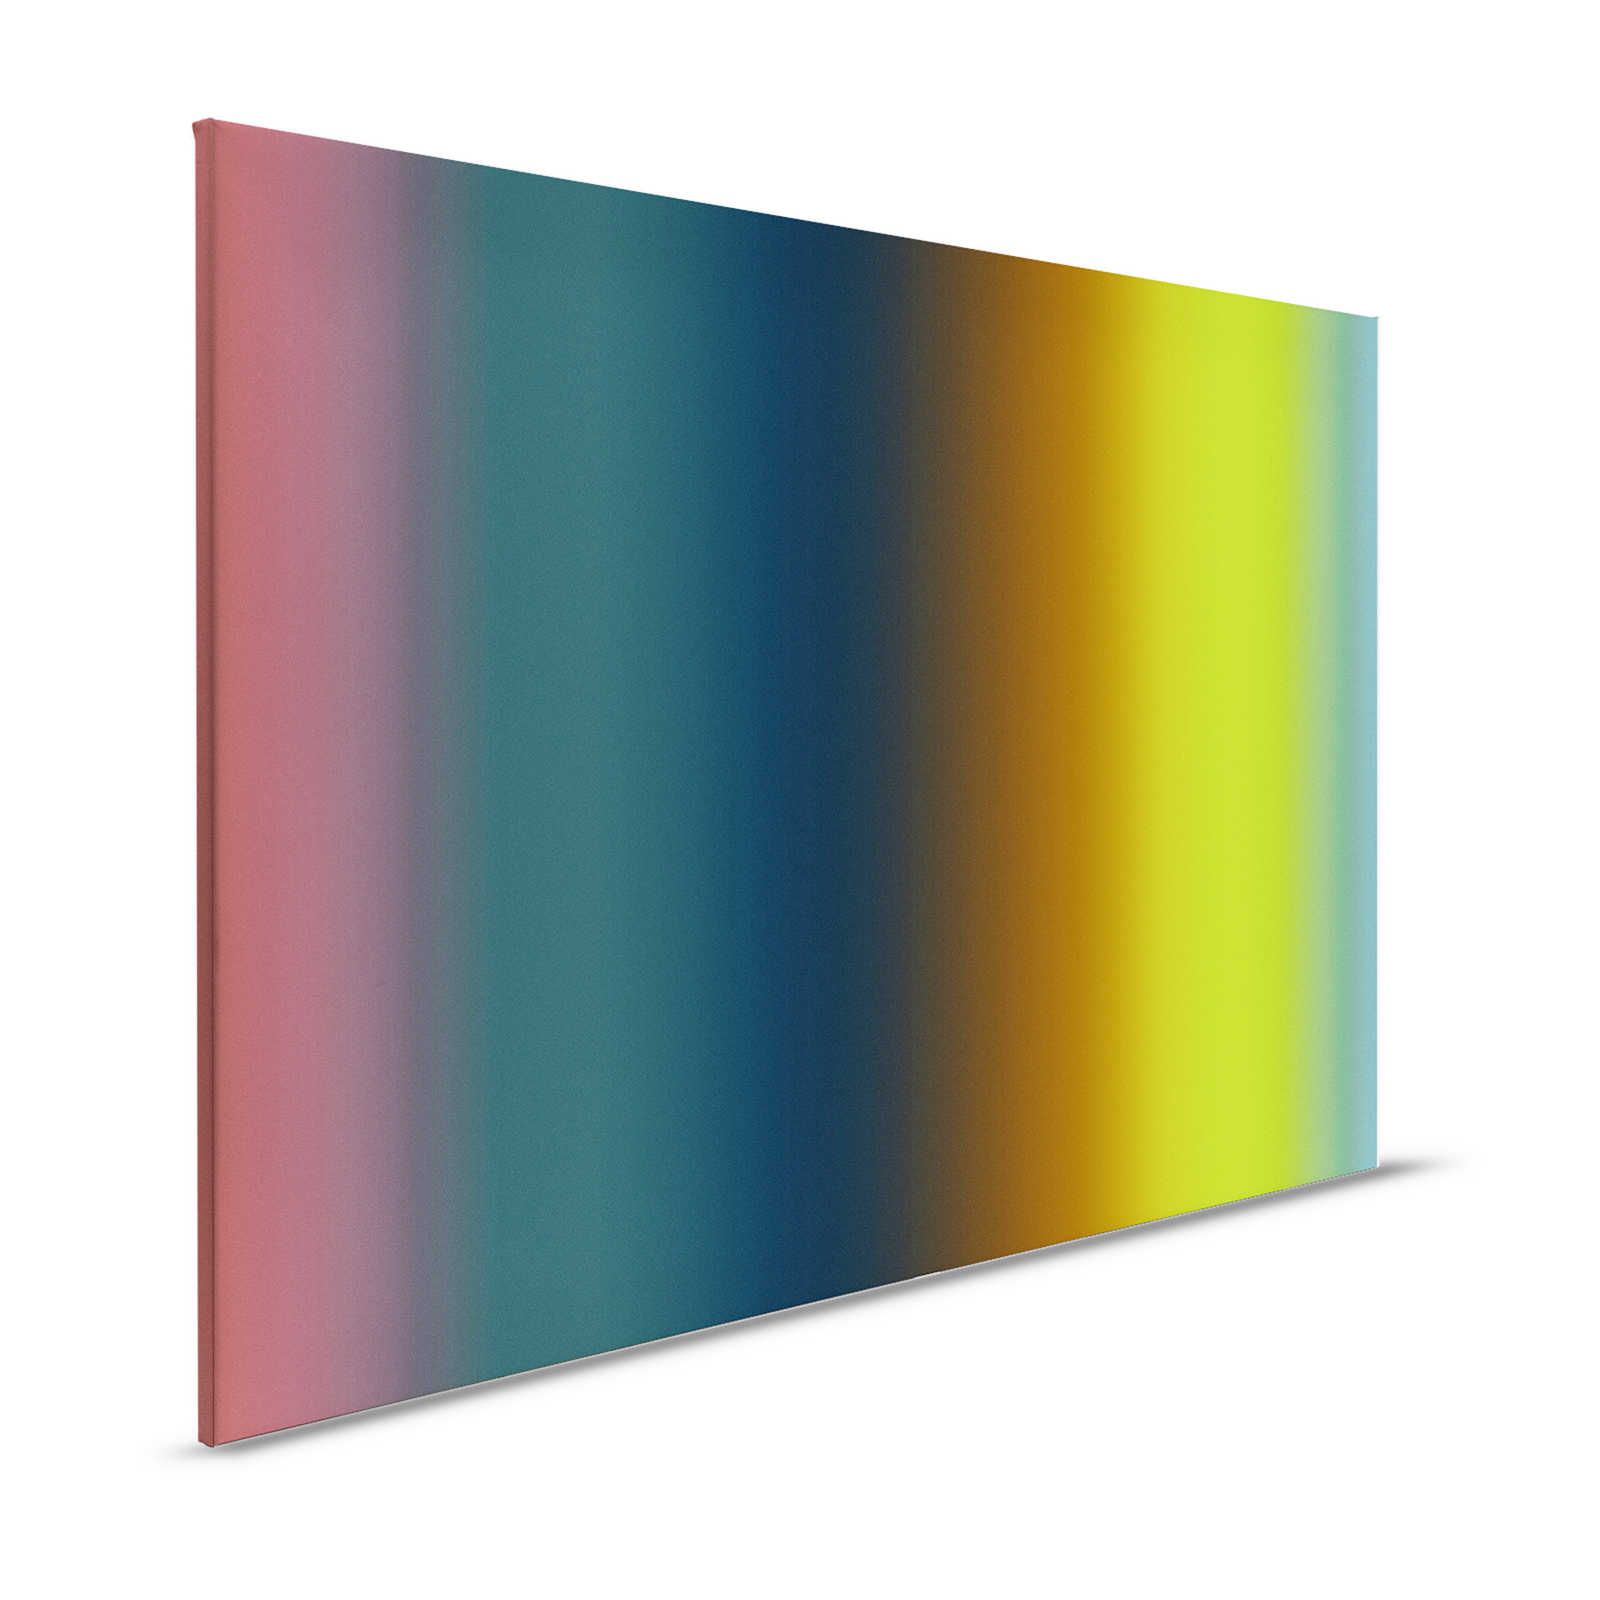 Over the Rainbow 1 - Leinwandbild Farbspektrum Regenbogen modern – 1,20 m x 0,80 m
